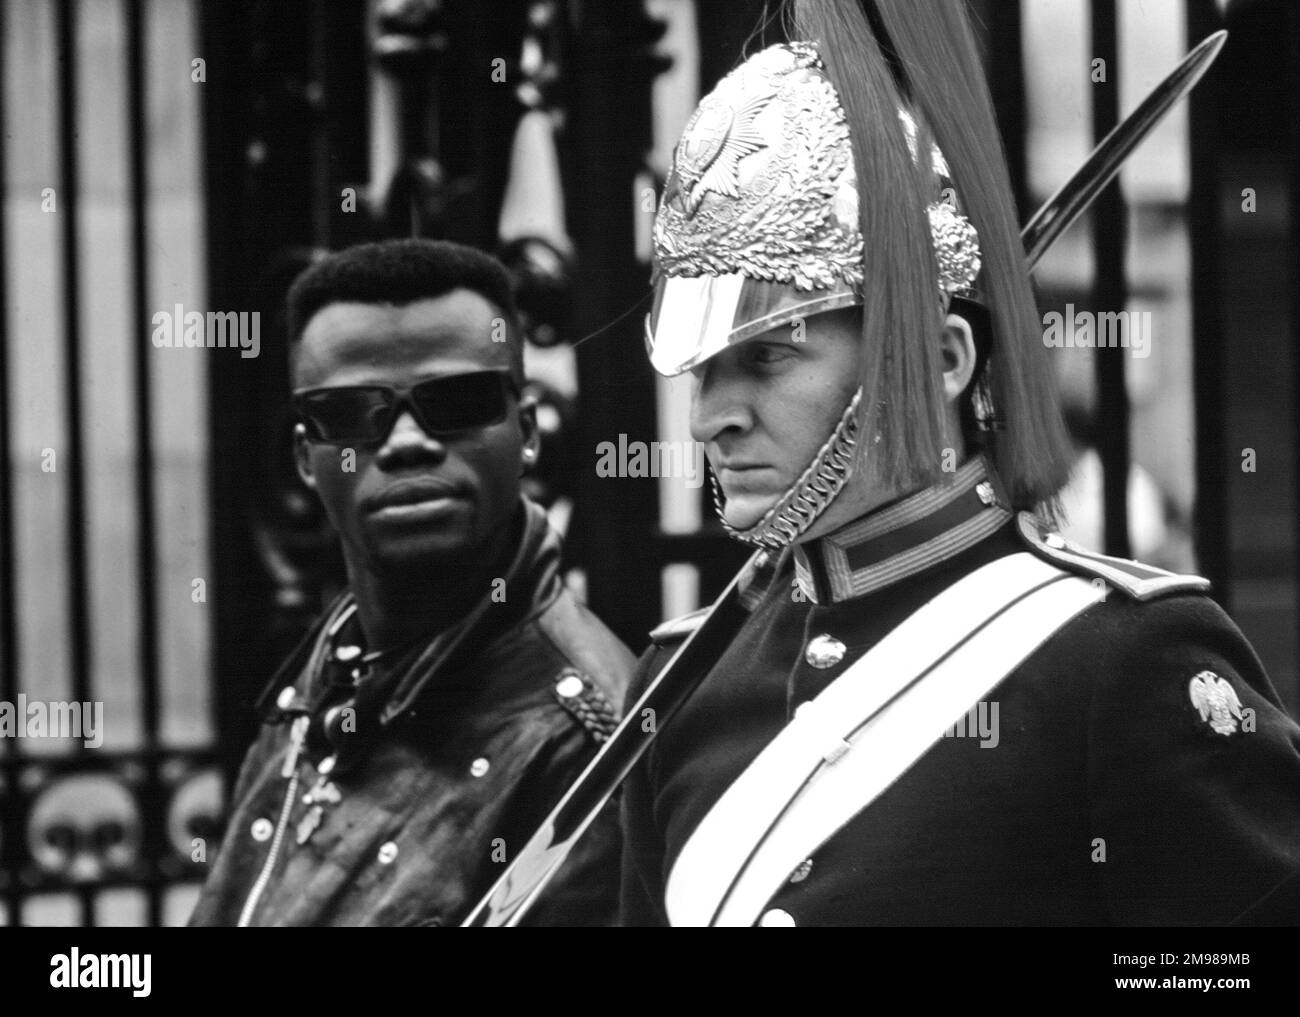 Guardsman with tourist spectator, Whitehall, London, England. Stock Photo